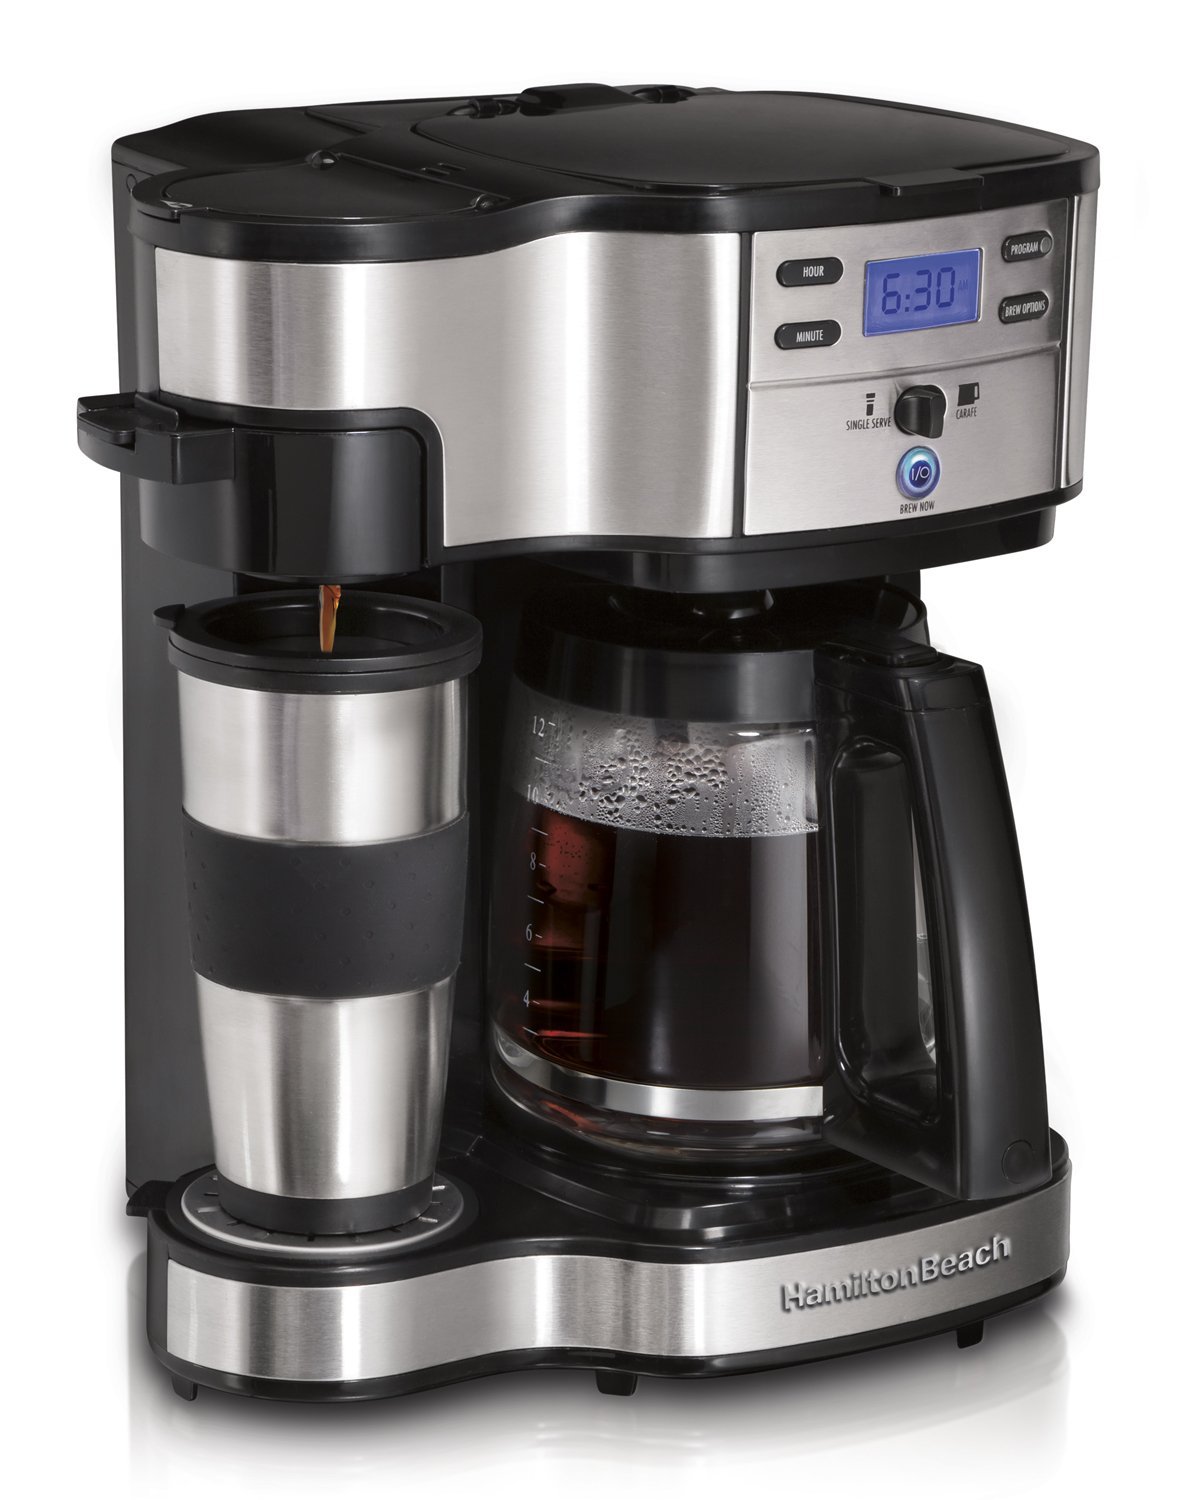 Hamilton Beach 49980A Single Serve Coffee Brewer and Full Pot Coffee Maker, 2-Way